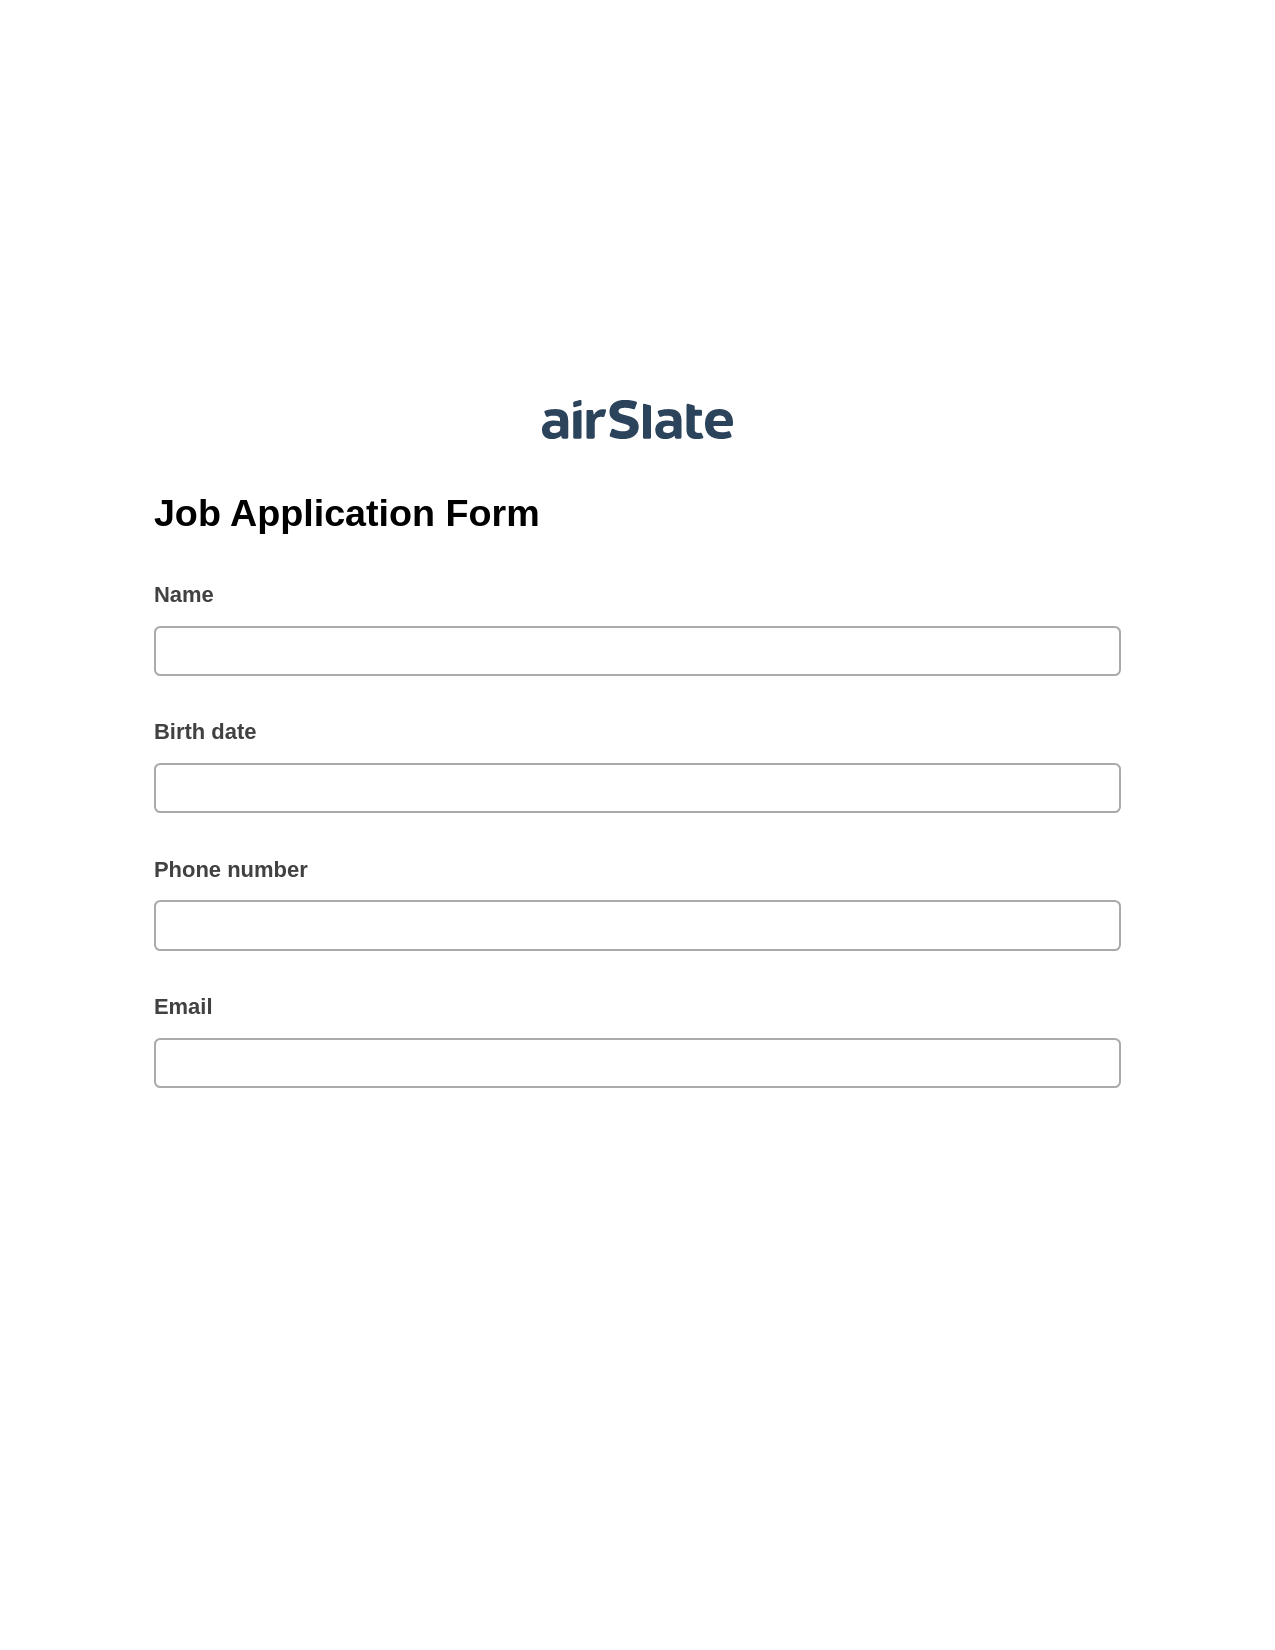 Multirole Job Application Form Pre-fill from Excel Spreadsheet Bot, Document Hide Bot, Box Bot